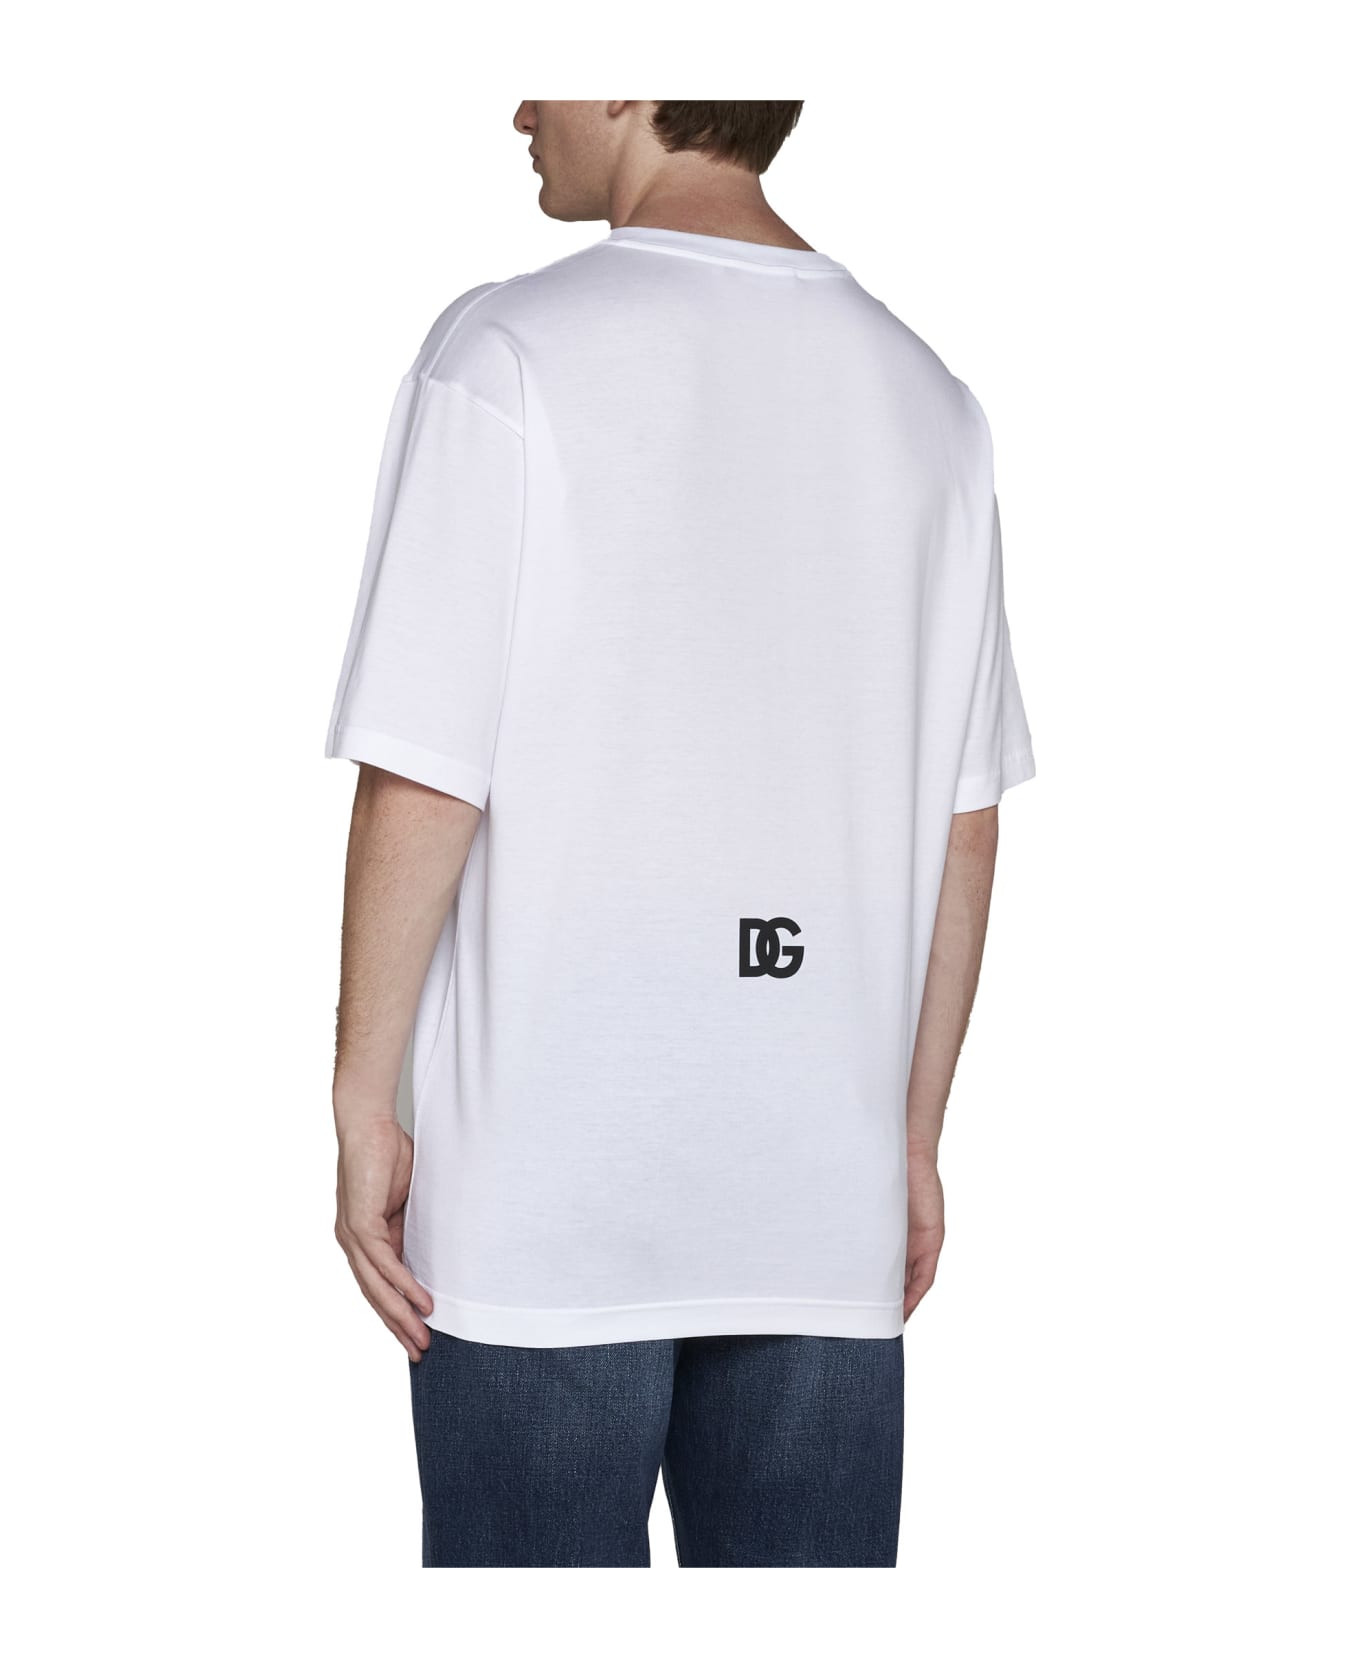 Dolce & Gabbana Dg Logo T-shirt - White